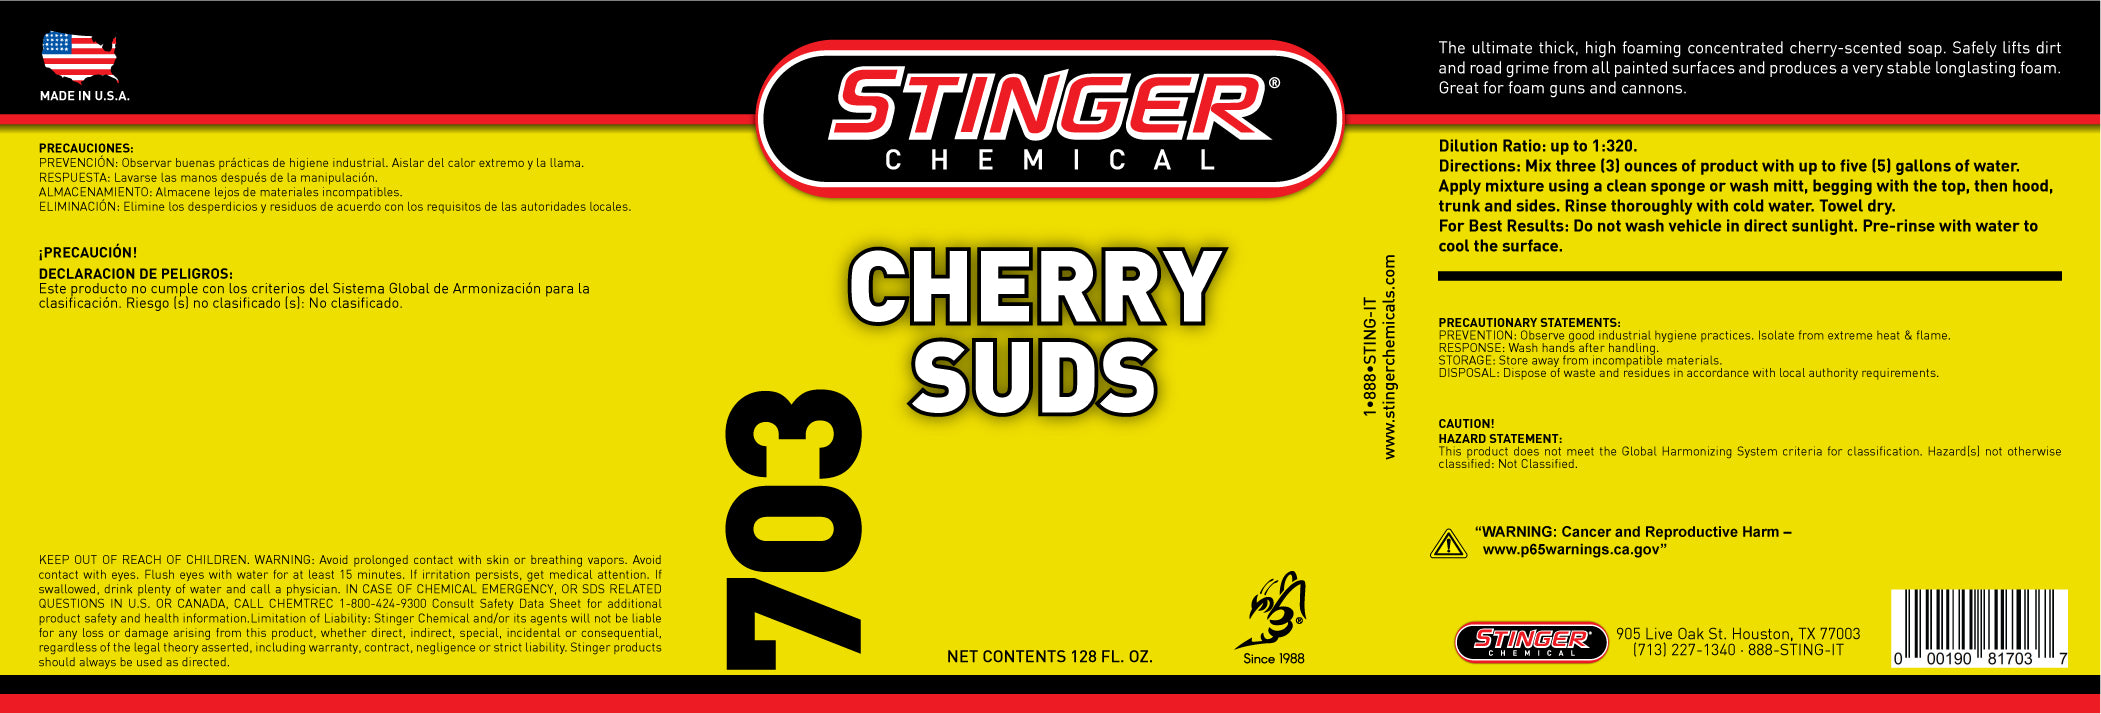 stinger-703-label